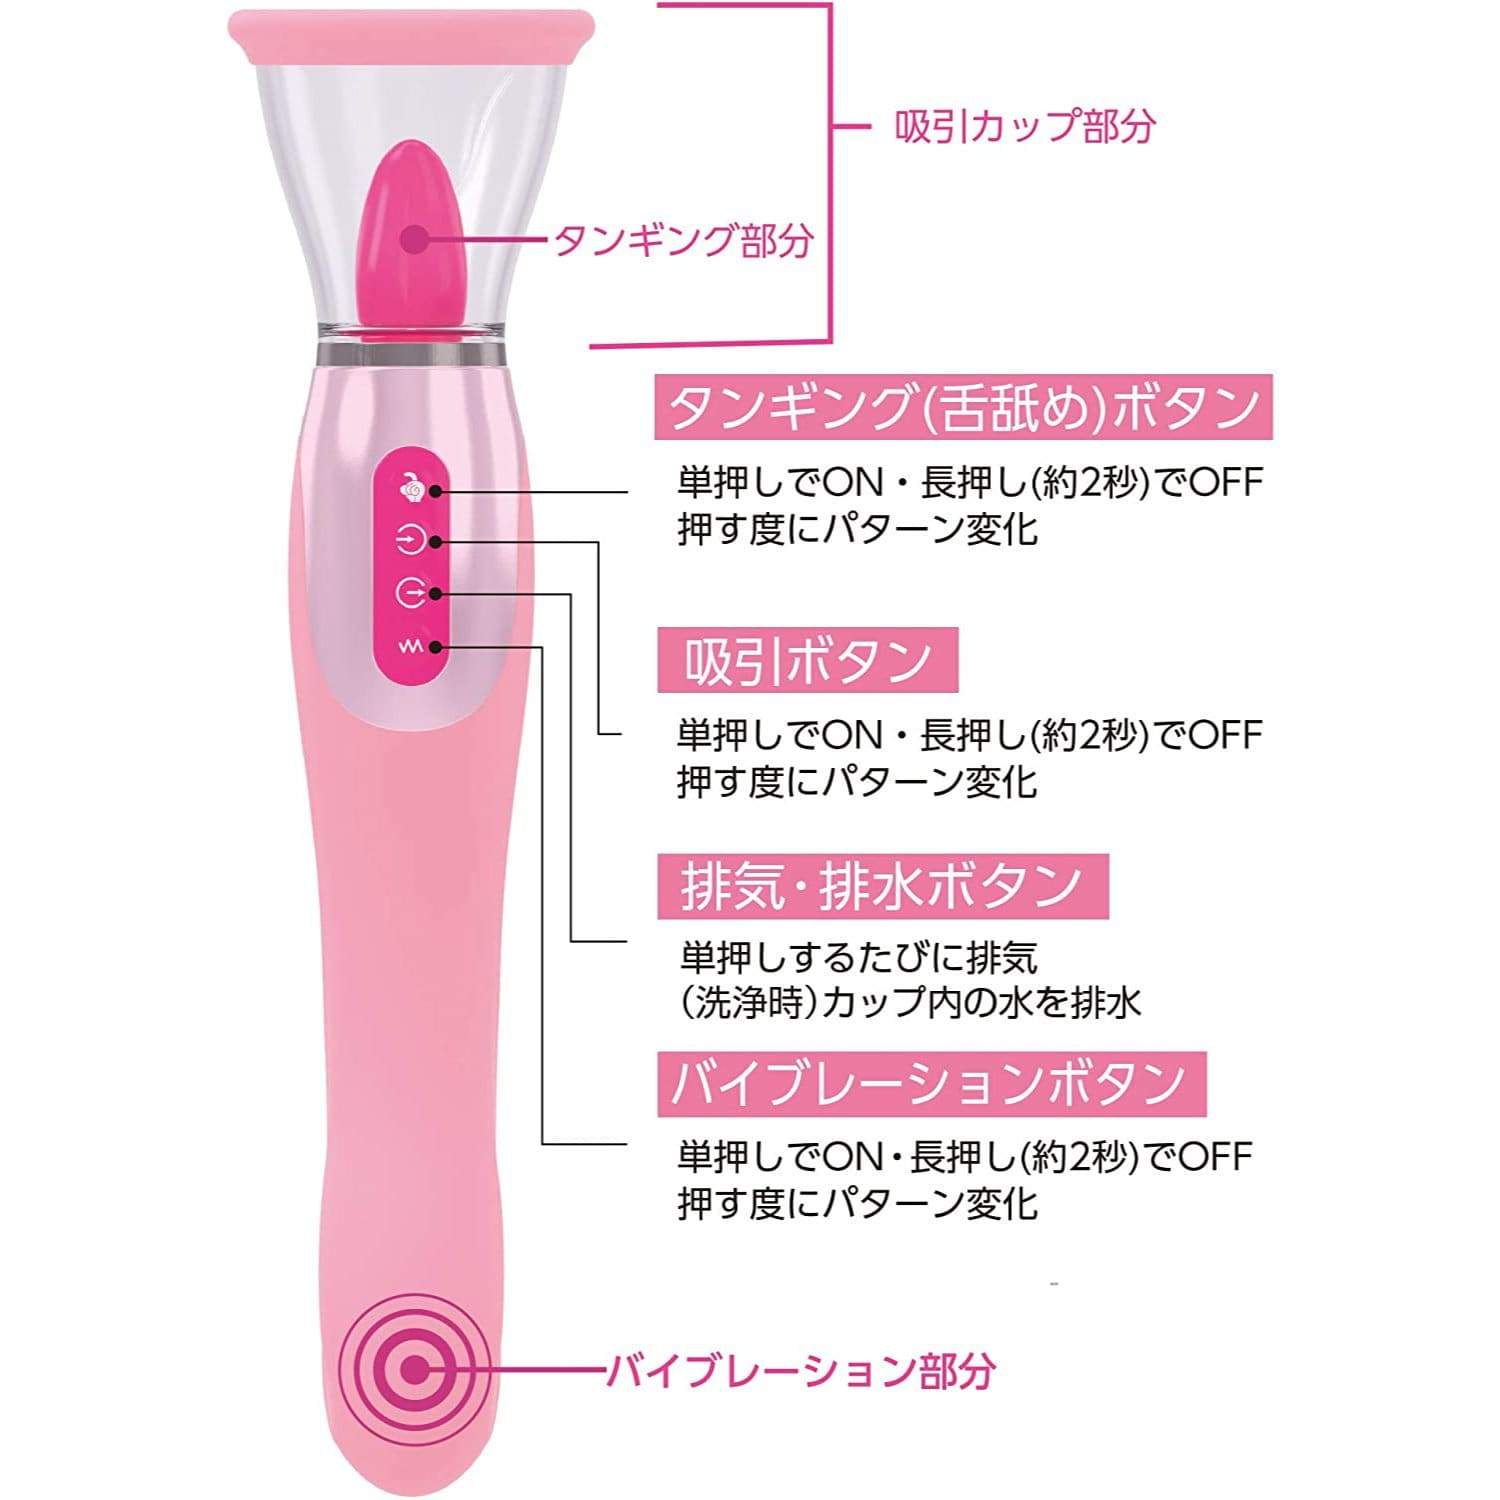 SSI Japan - Woman Love Air Max Body Pump (Pink) -  Clitoral Pump (Vibration) Rechargeable  Durio.sg